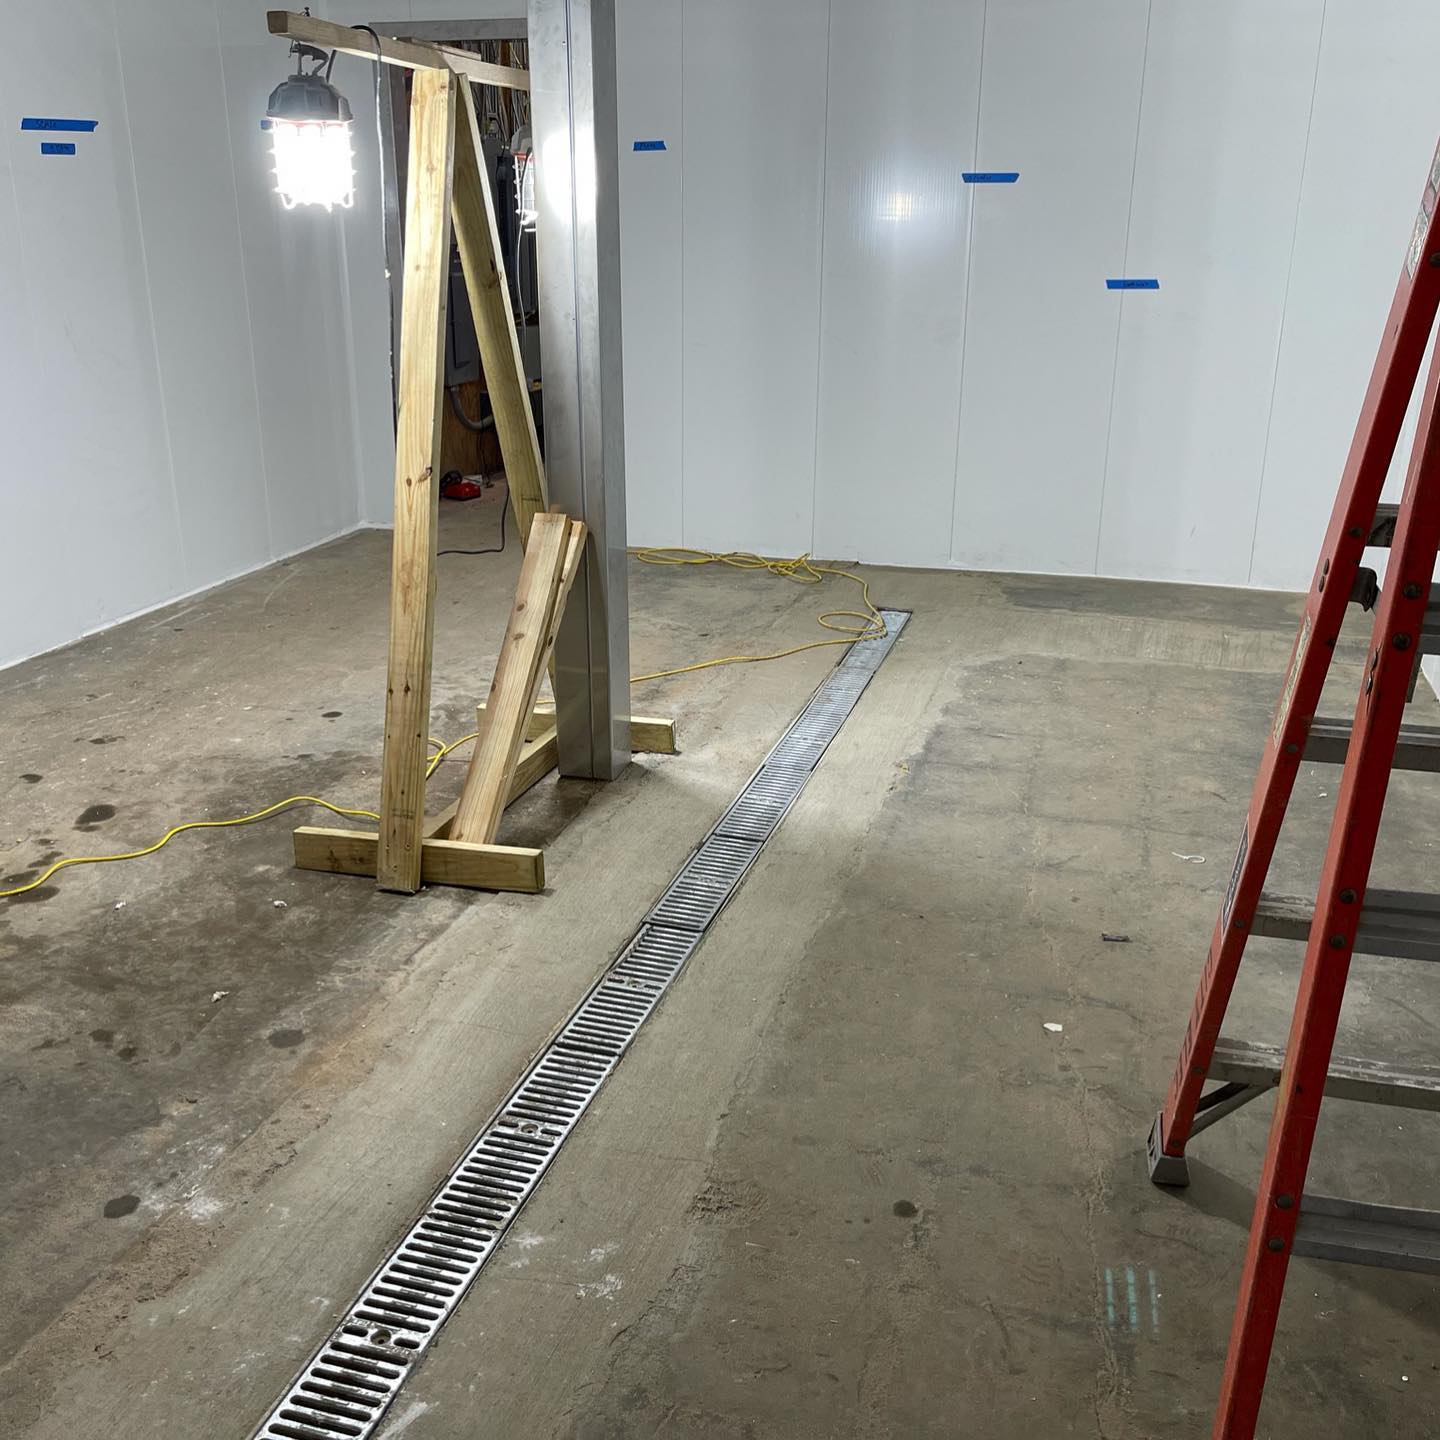 New resinous commercial floor install in Friona, TX.